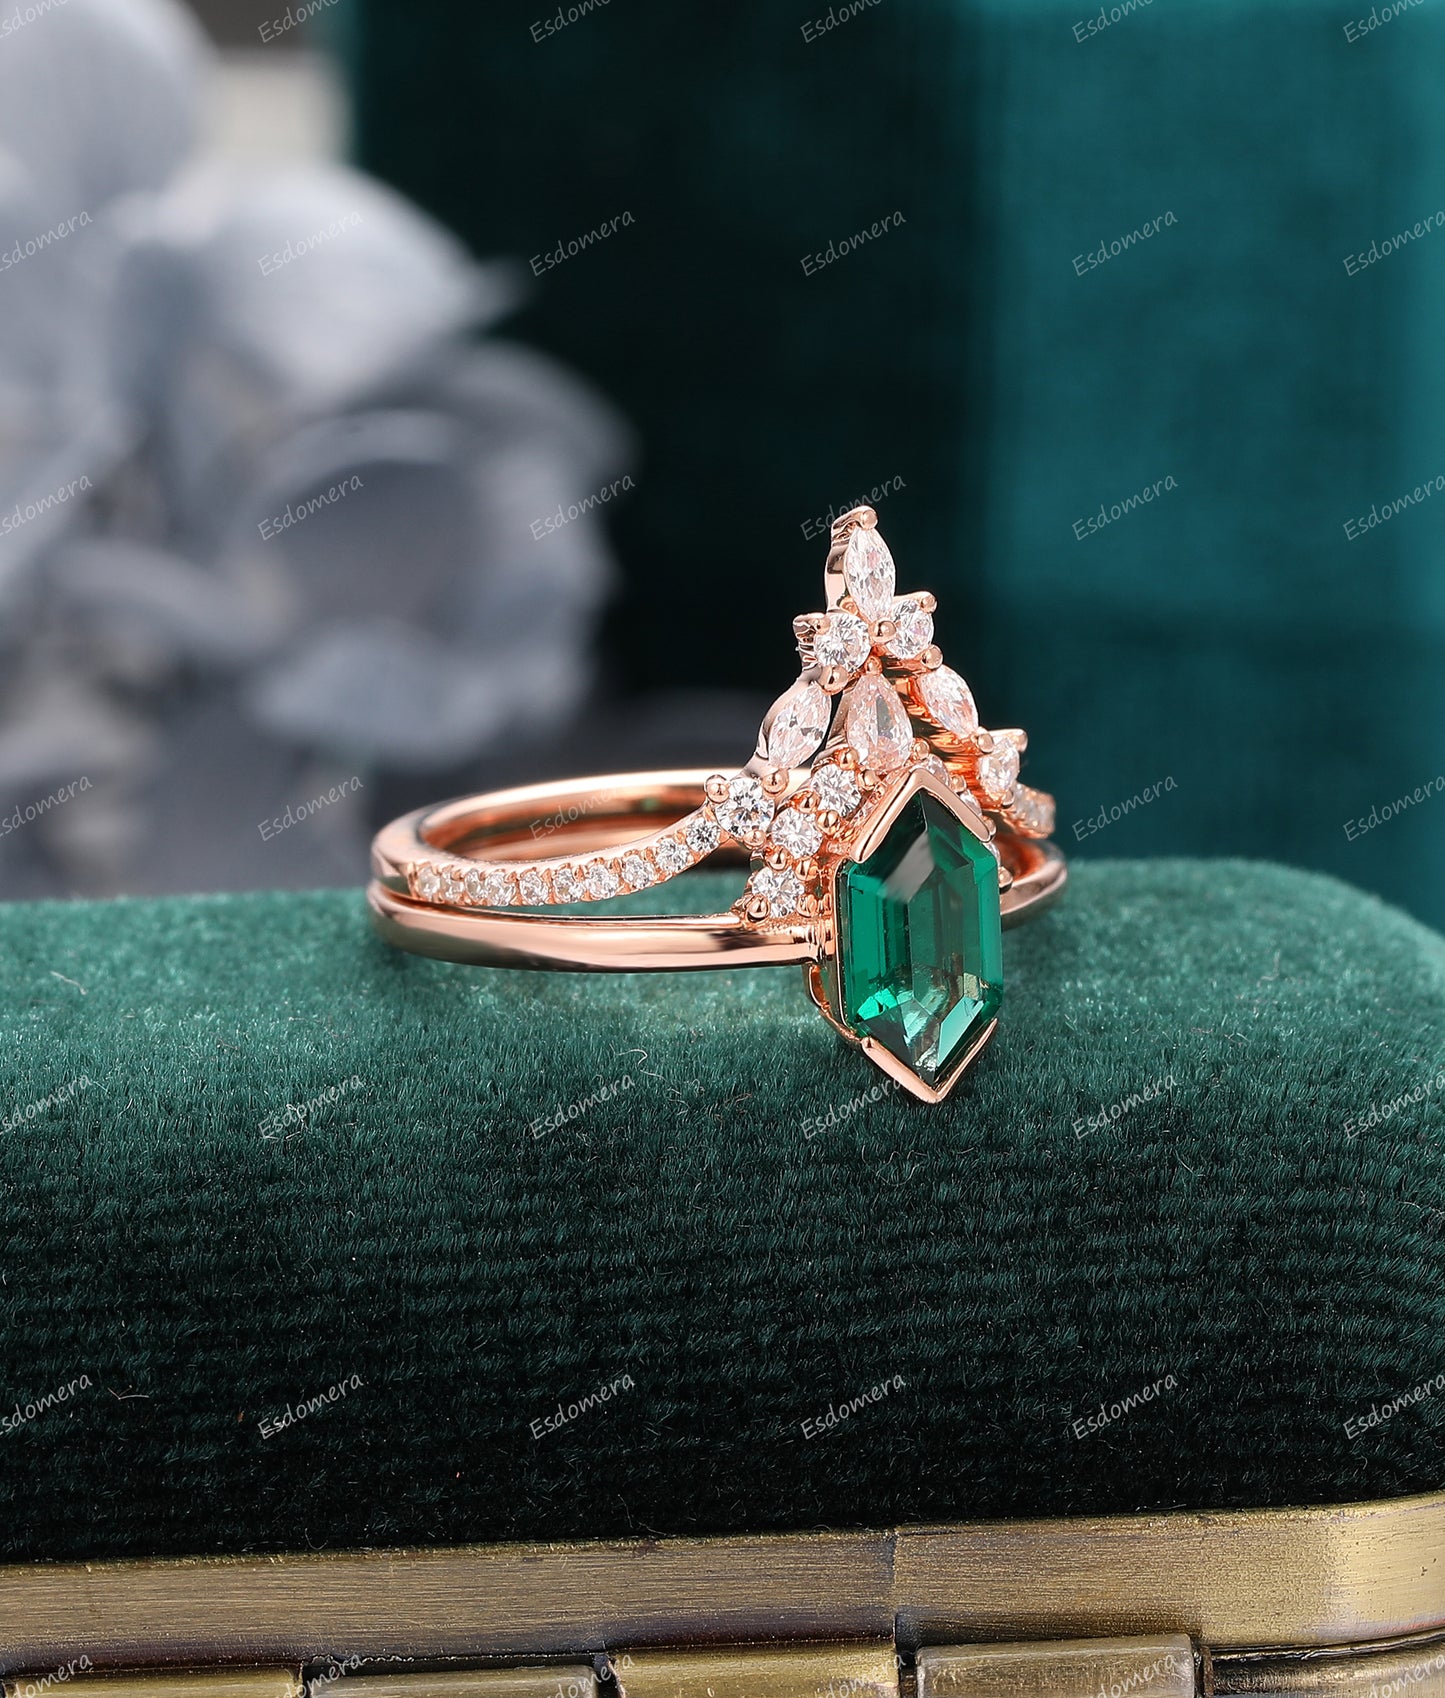 Vintage 1.10CT Long Hexagon Cut Emerald Wedding Ring Set, V Shaped Moissanite Half Eternity Band, 14K Rose Gold Ring Set